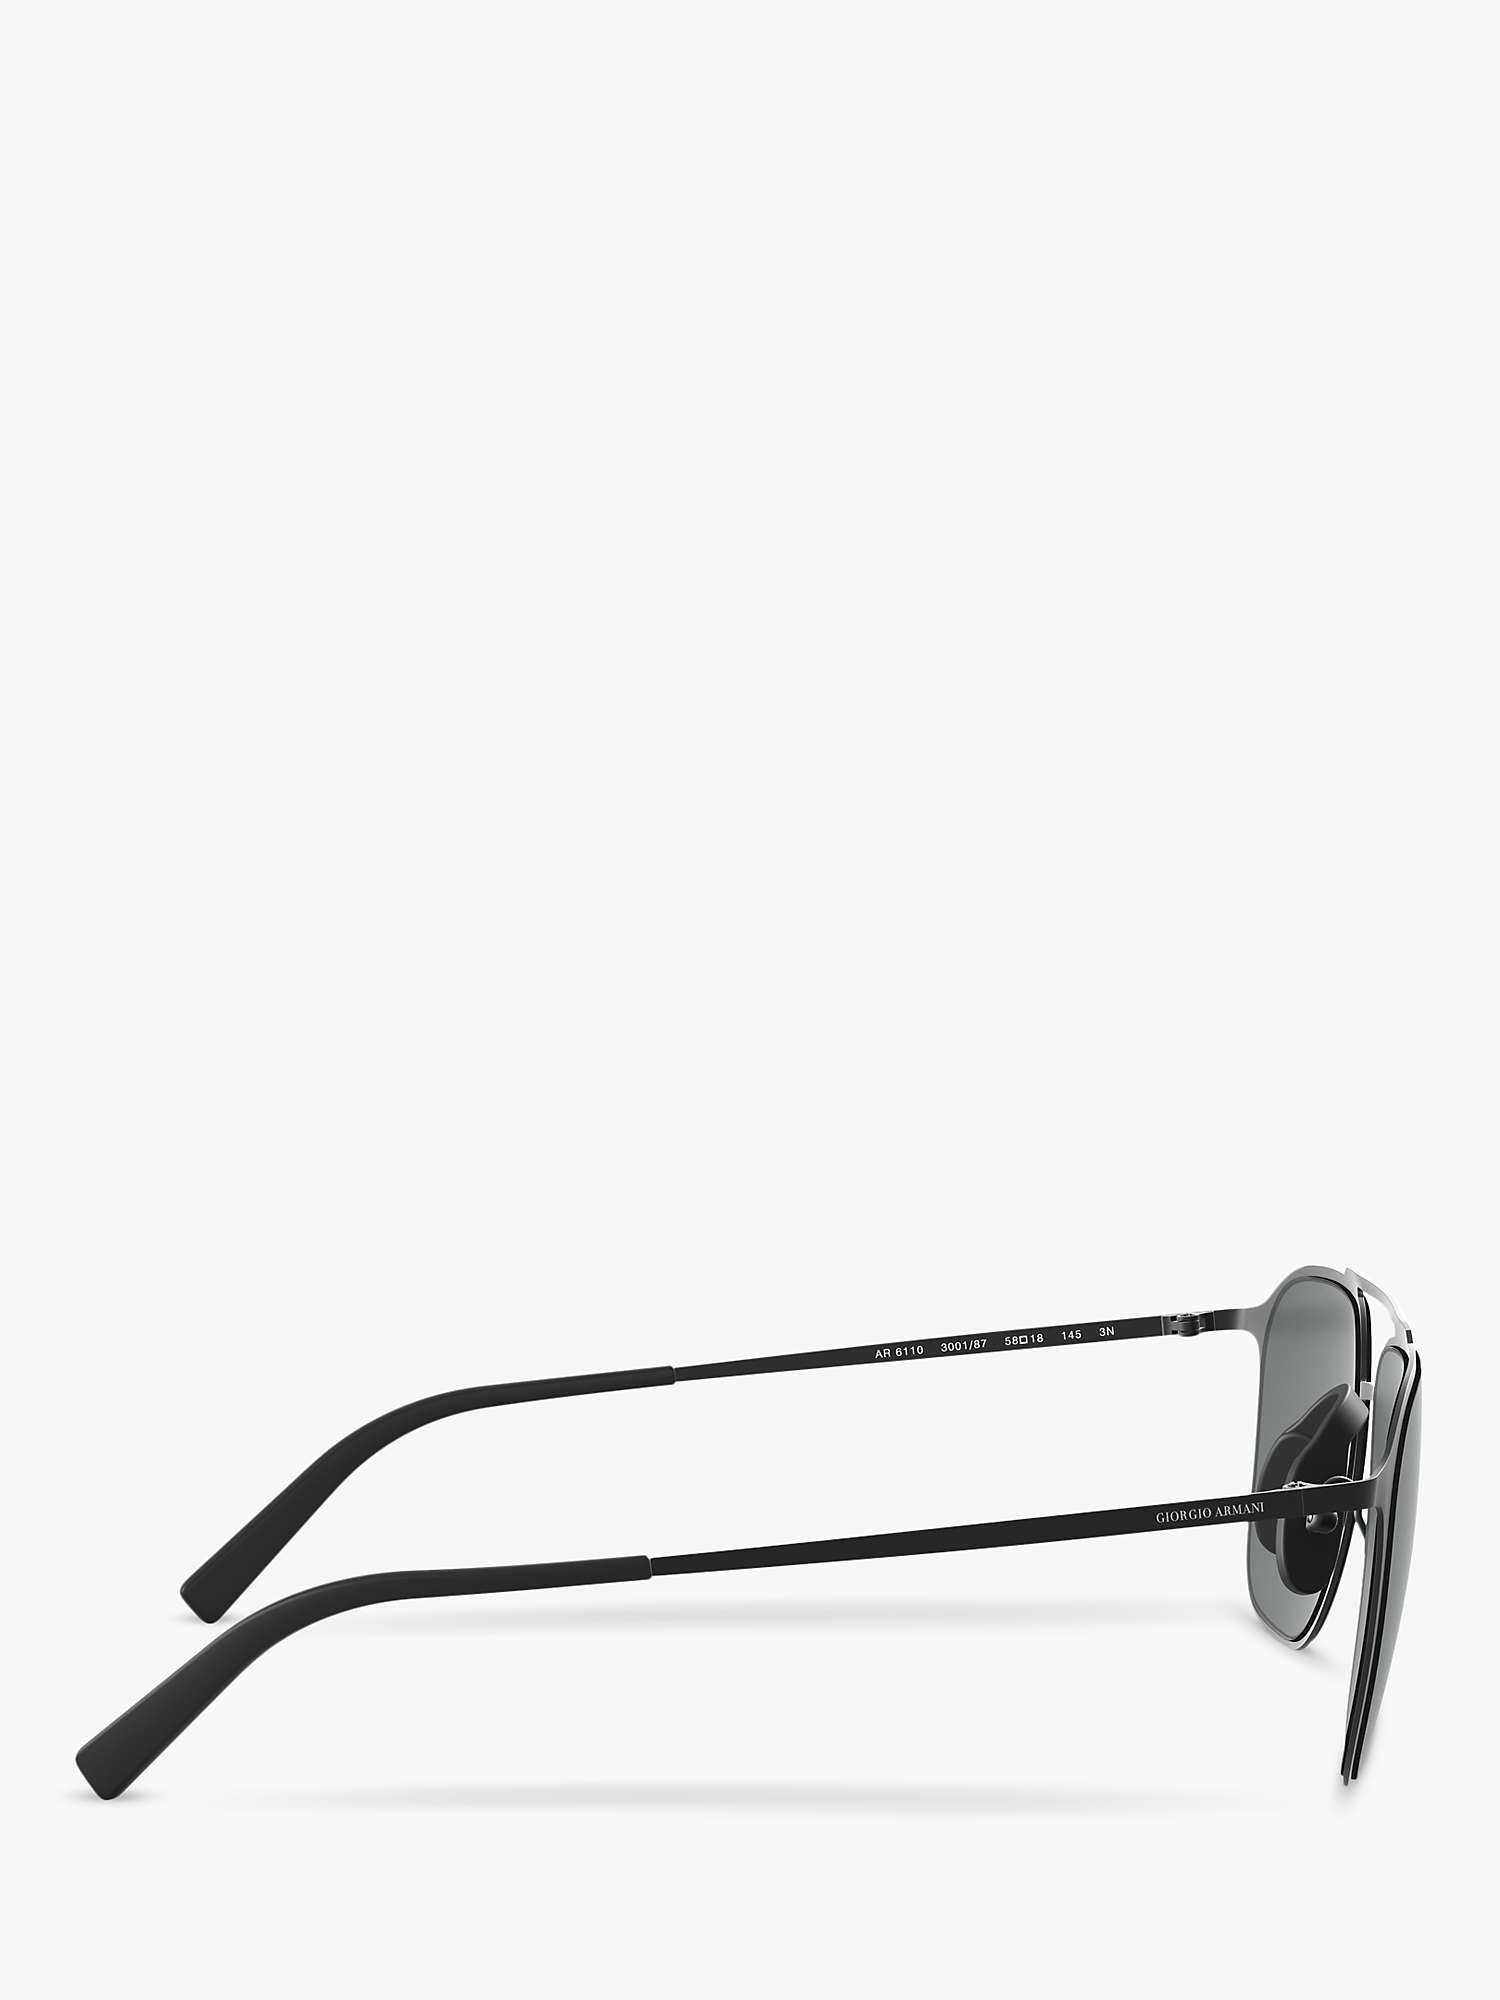 Buy Giorgio Armani AR6110 Men's Square Sunglasses Online at johnlewis.com